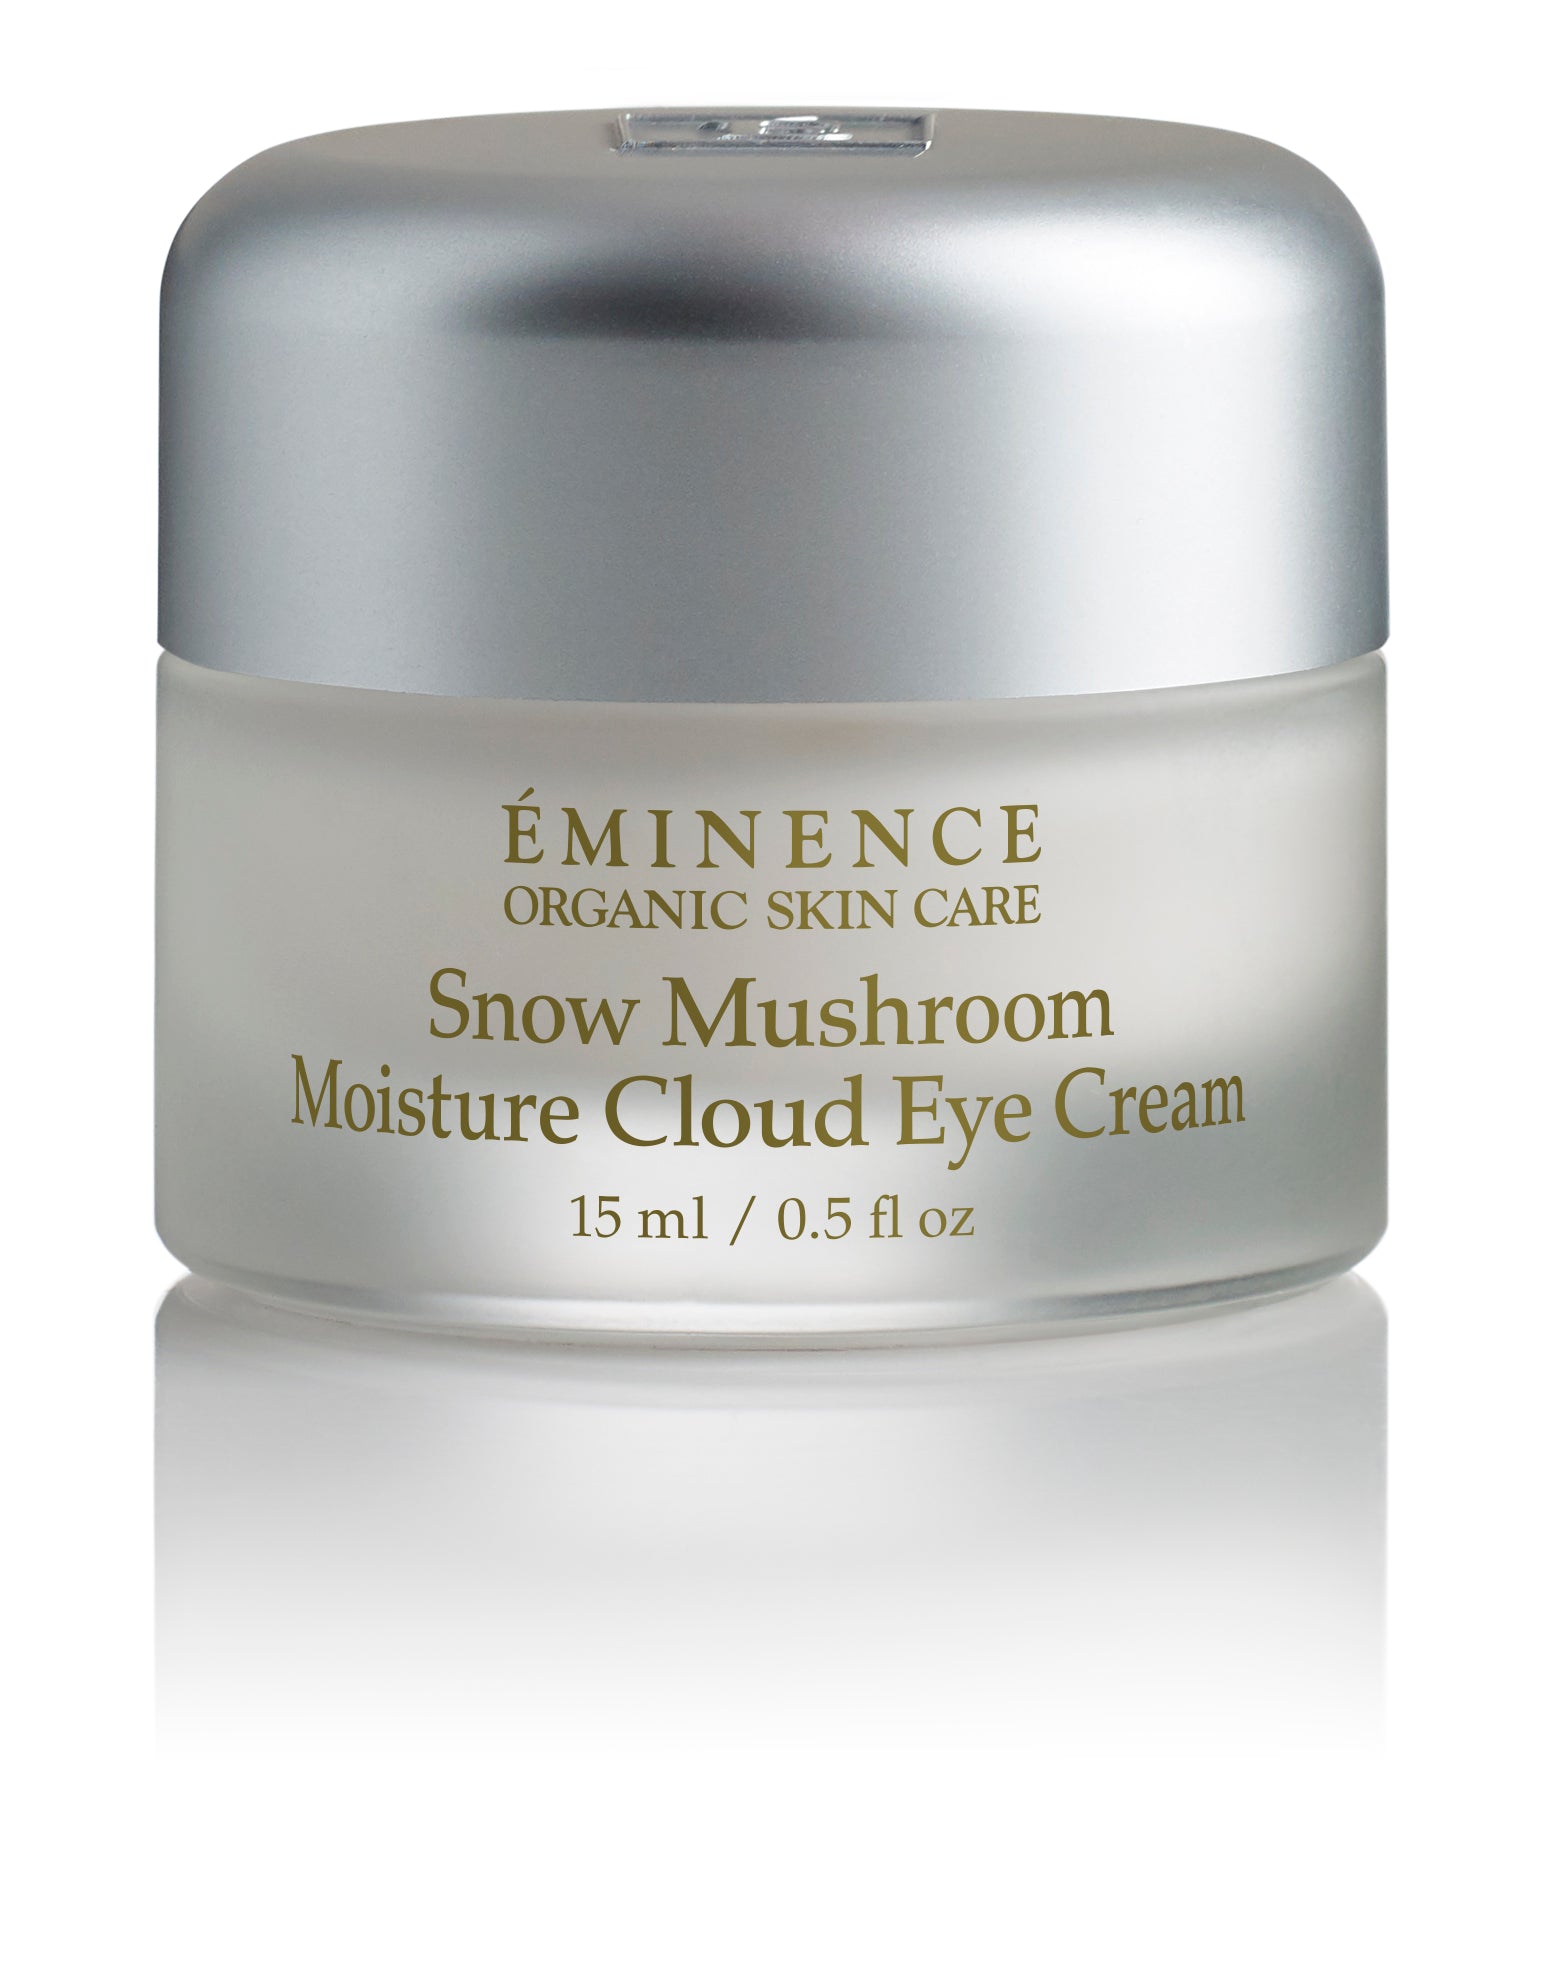 Snow Mushroom Moisture Cloud Eye Cream